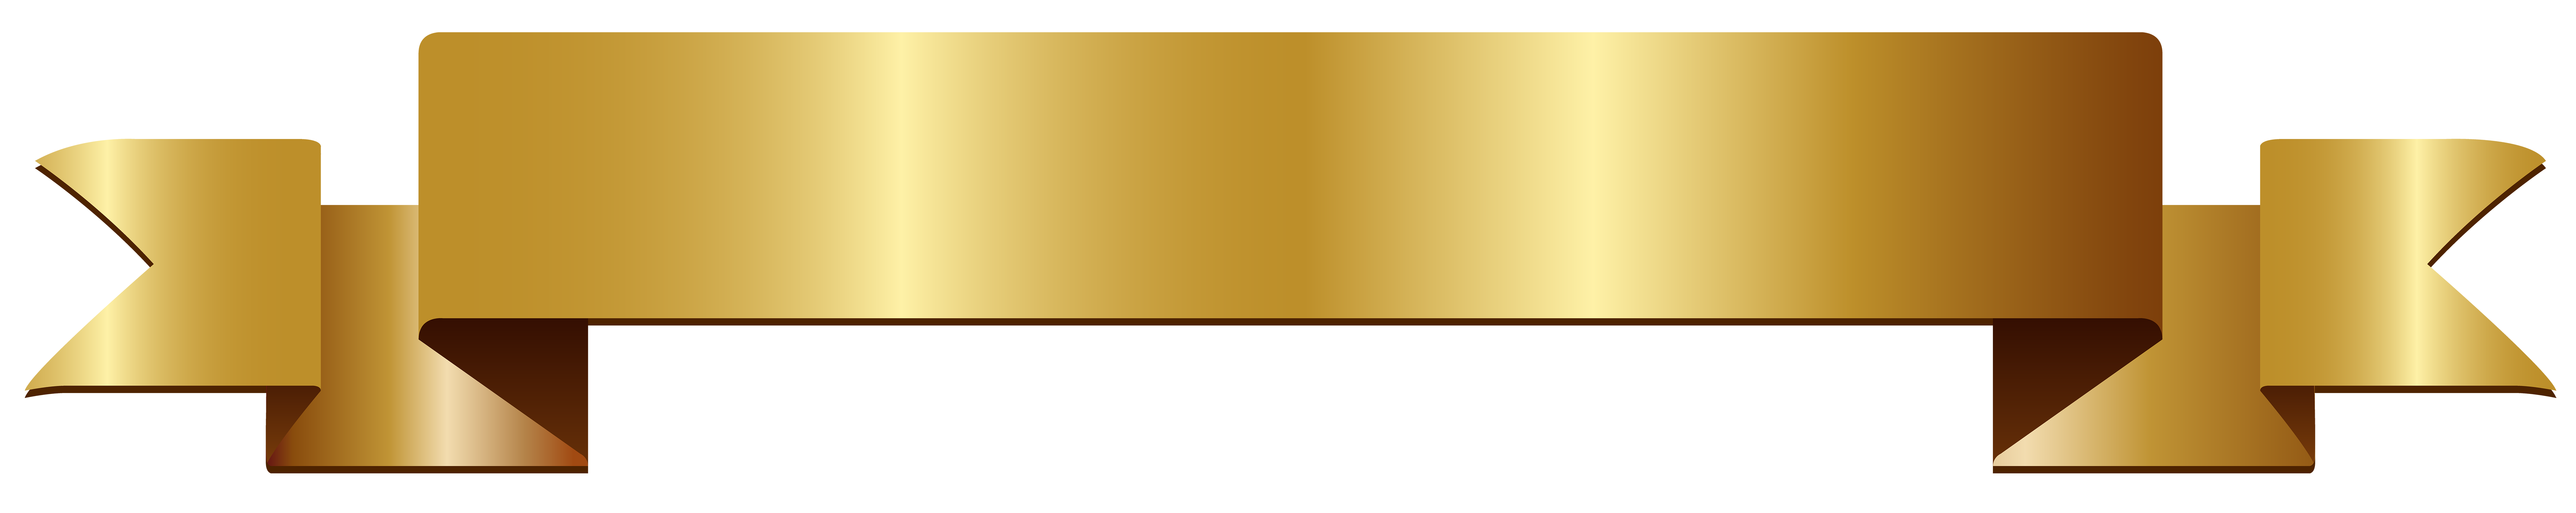 clip art gold banner - photo #33